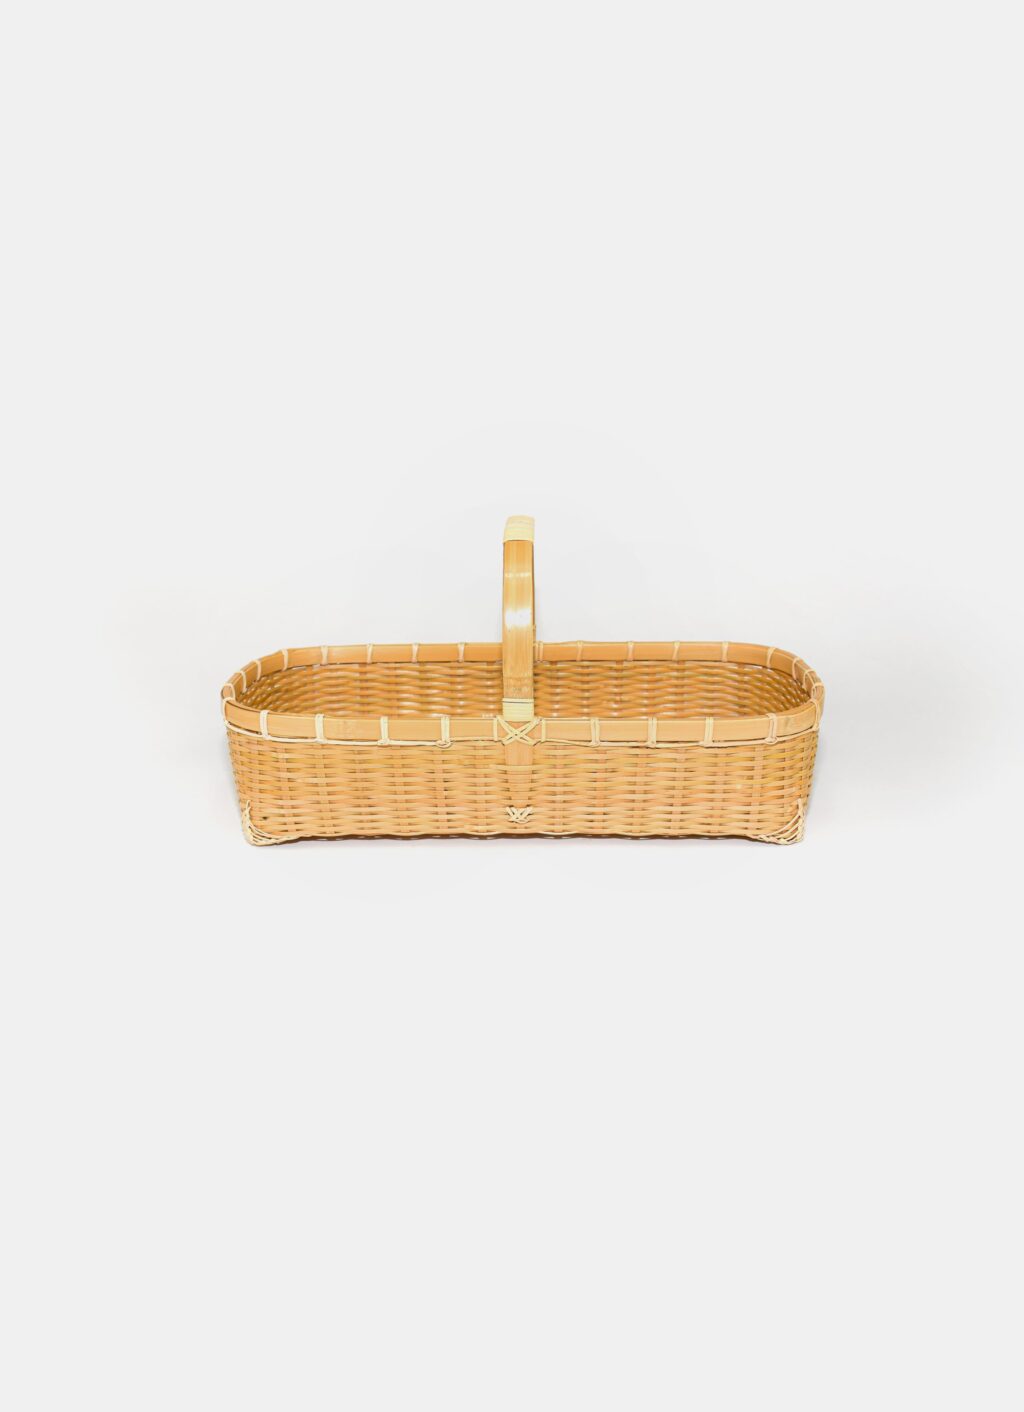 Kohchosai Kosuga - Handmade Japanese Bamboo Bread Basket